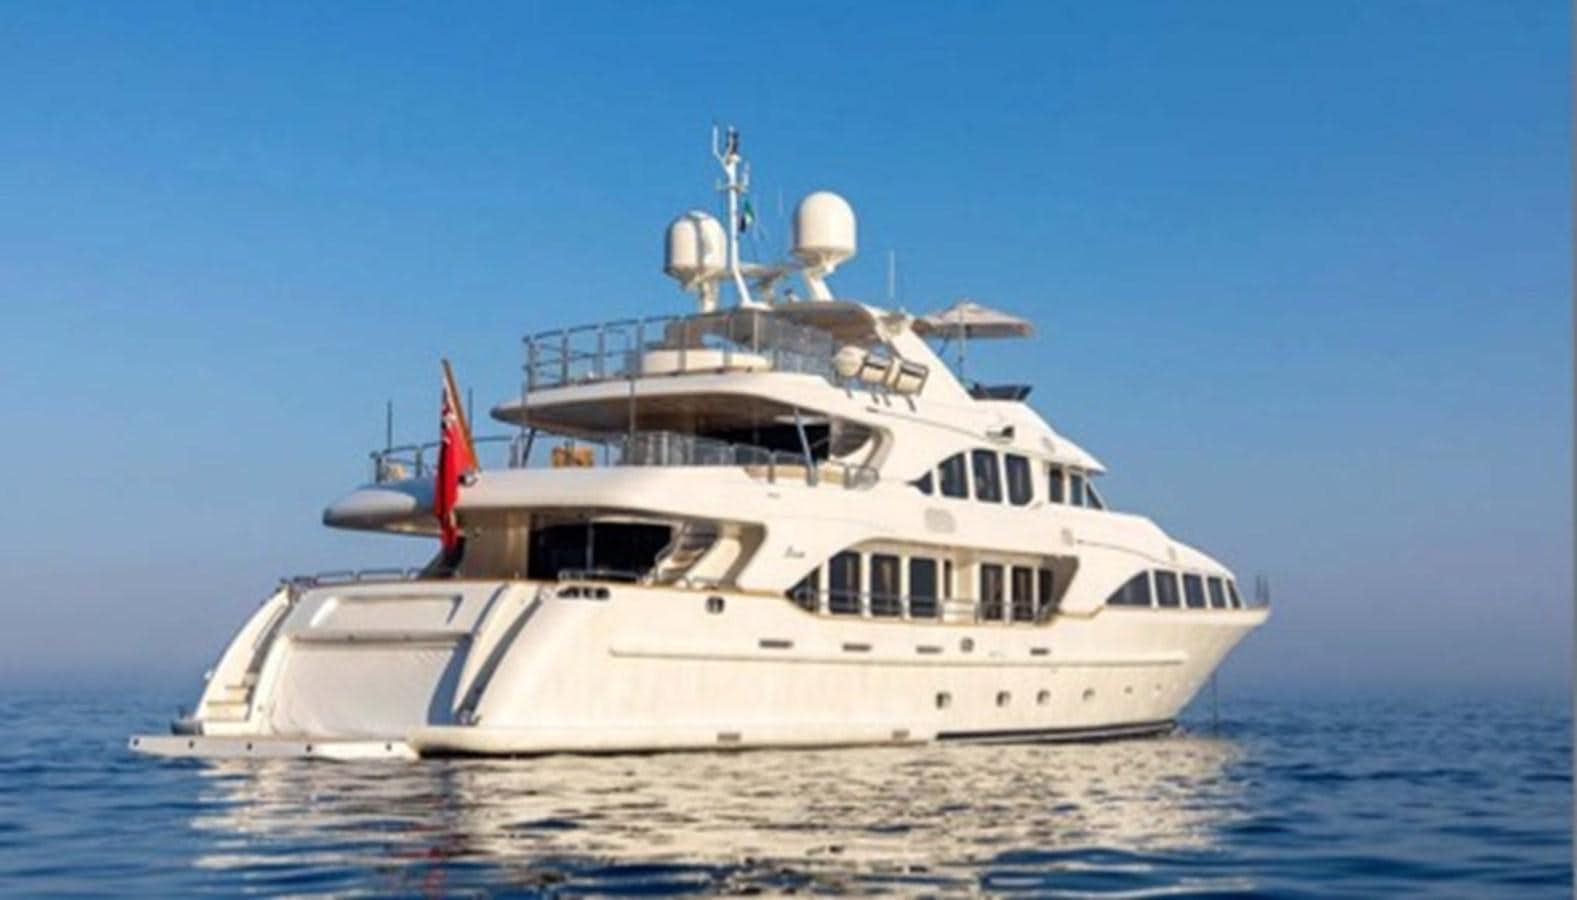 Mi amore julia
Yacht for Sale